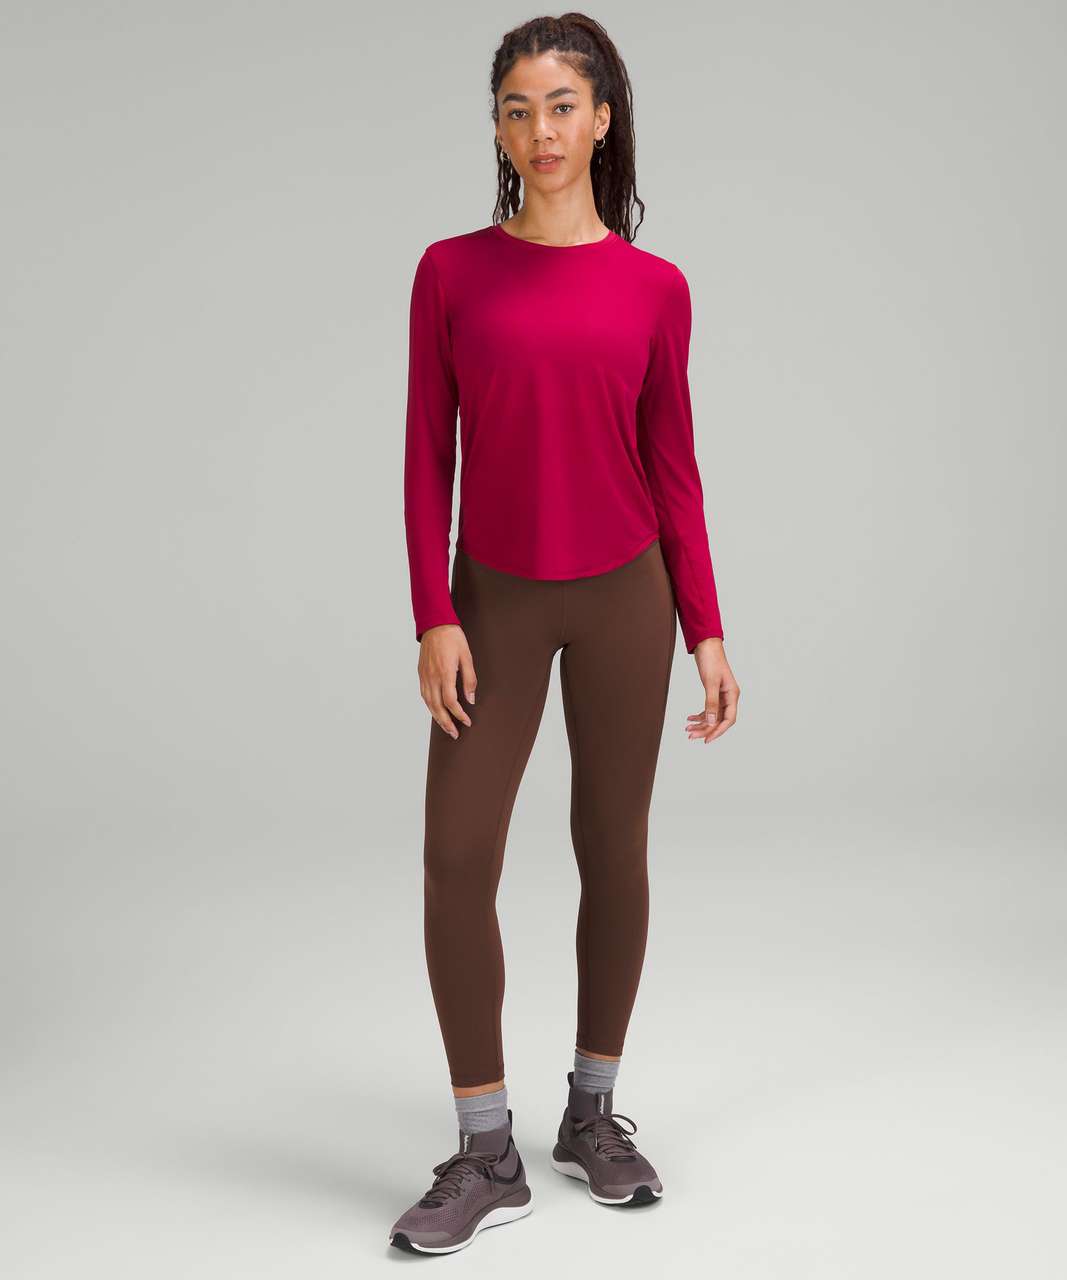 Lululemon High-Neck Running and Training Long Sleeve Shirt - Pomegranate